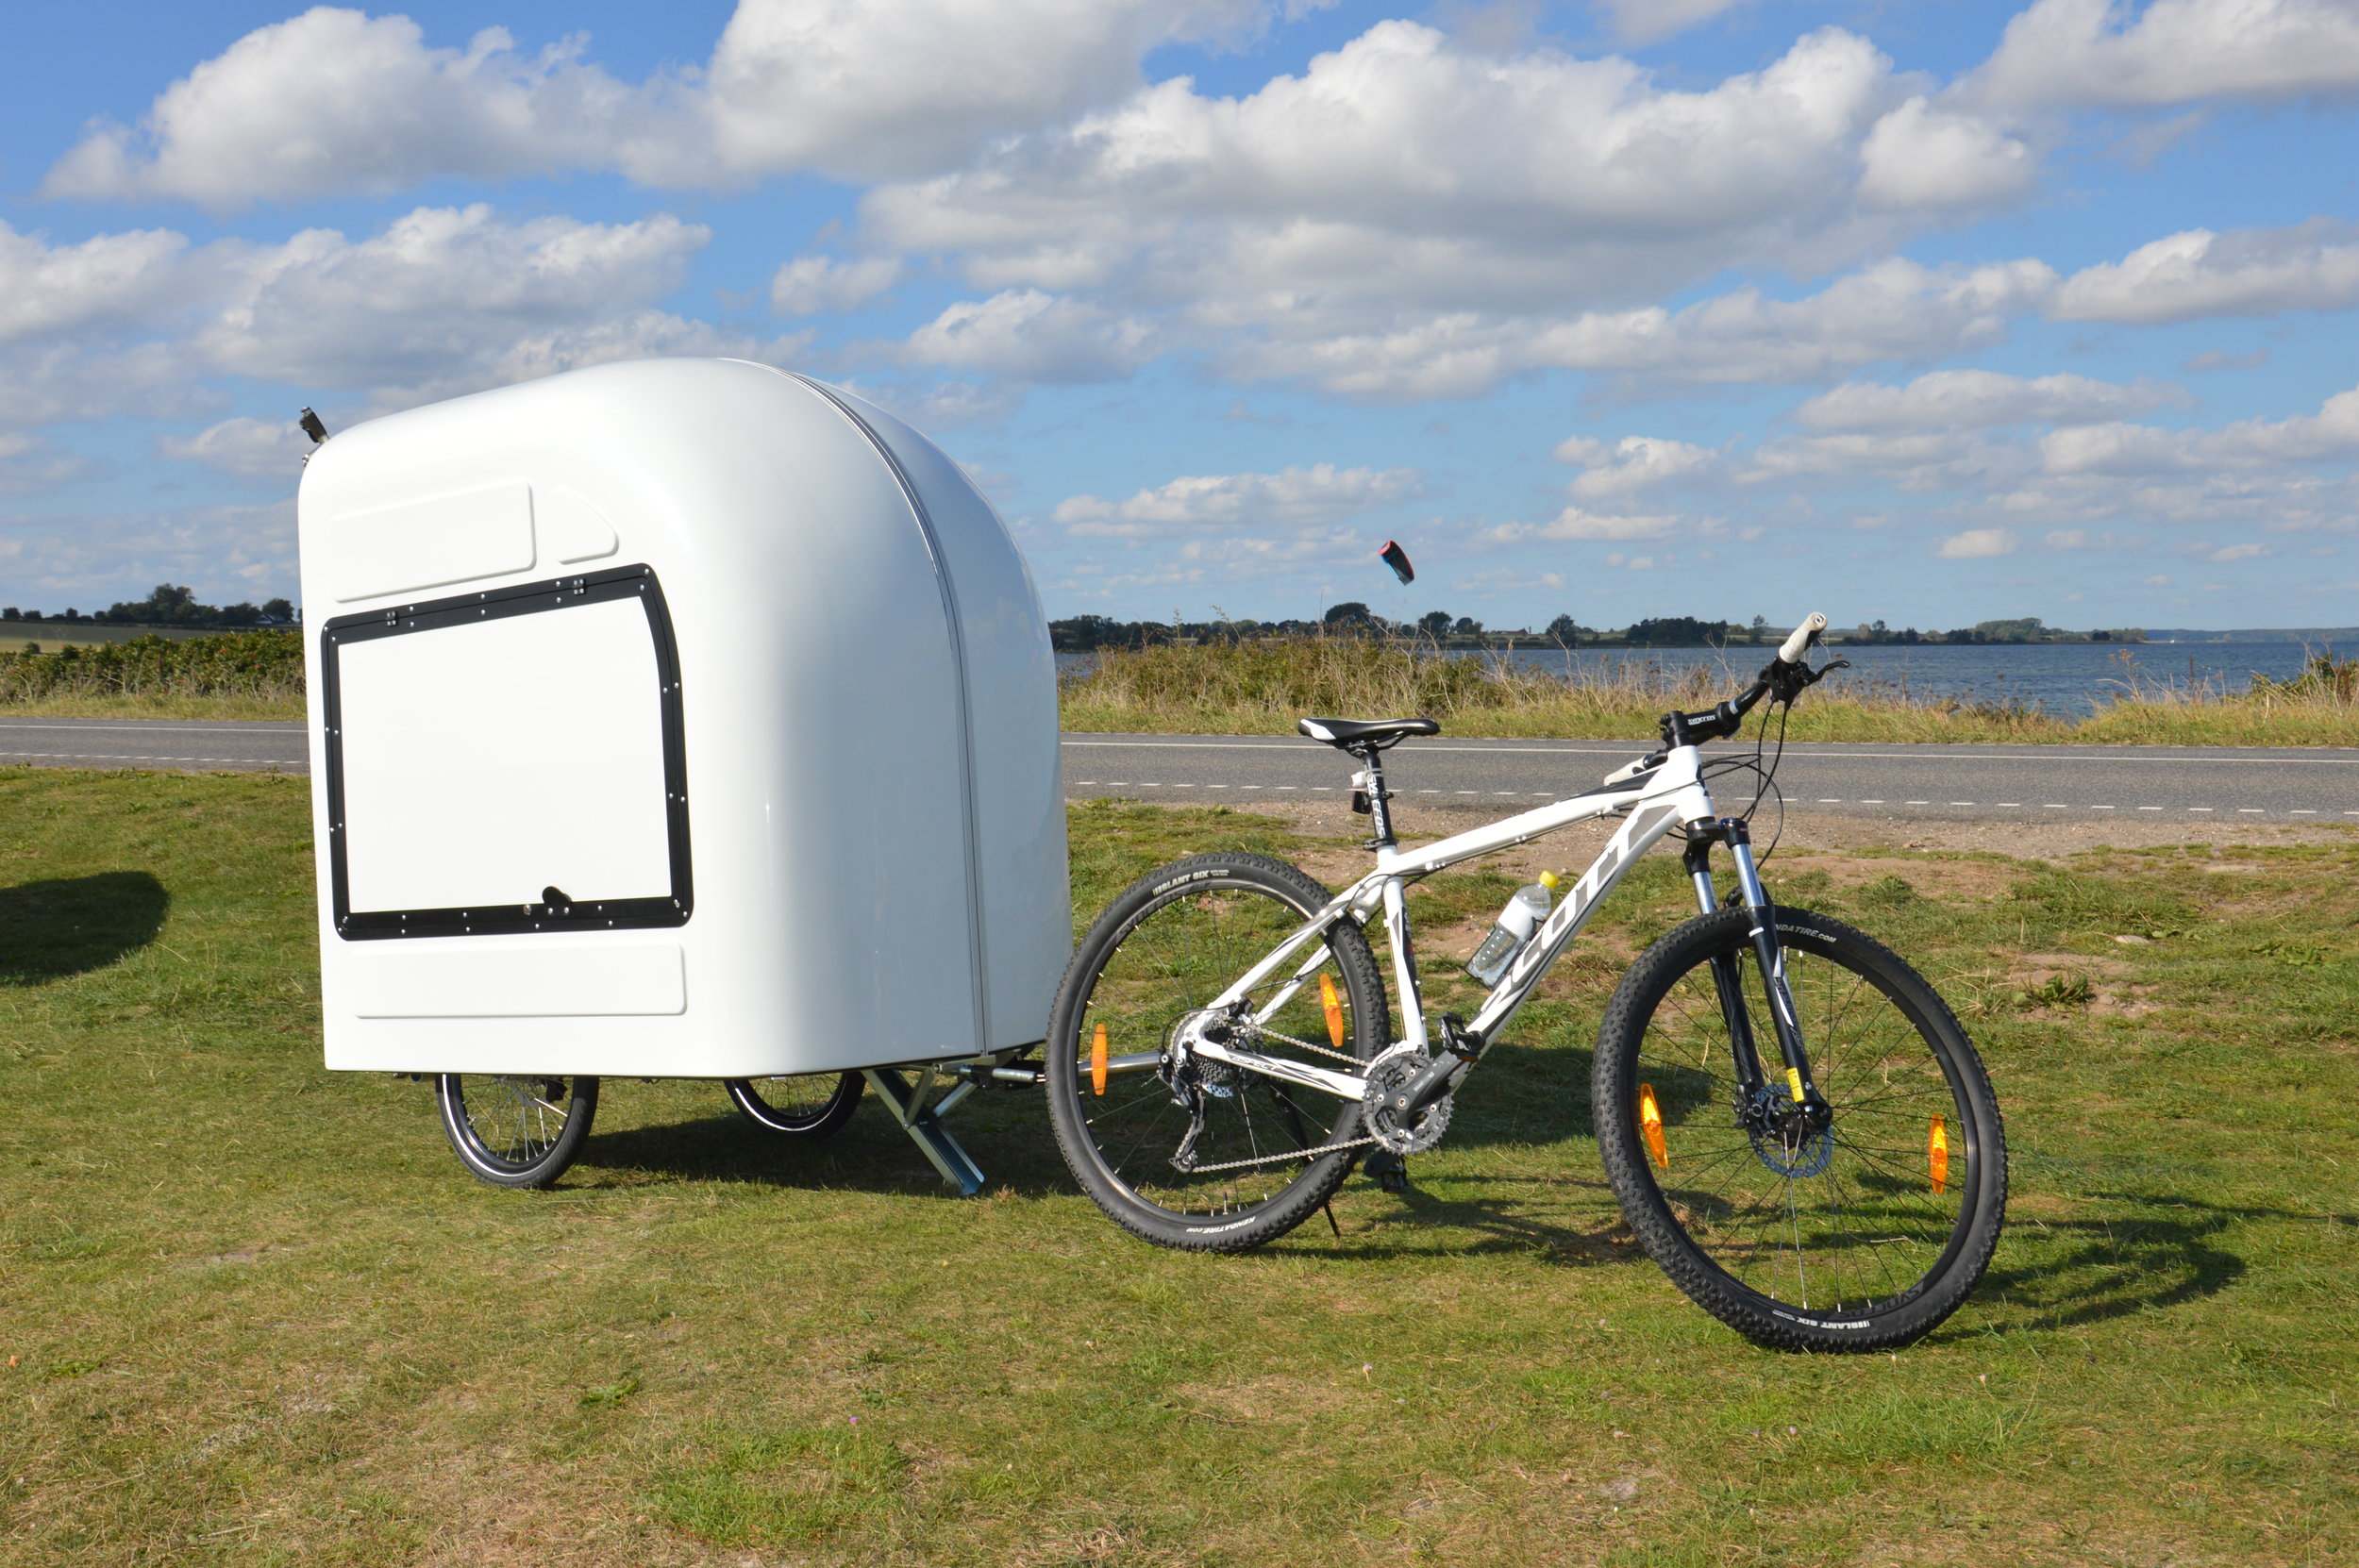 bike friday travel trailer